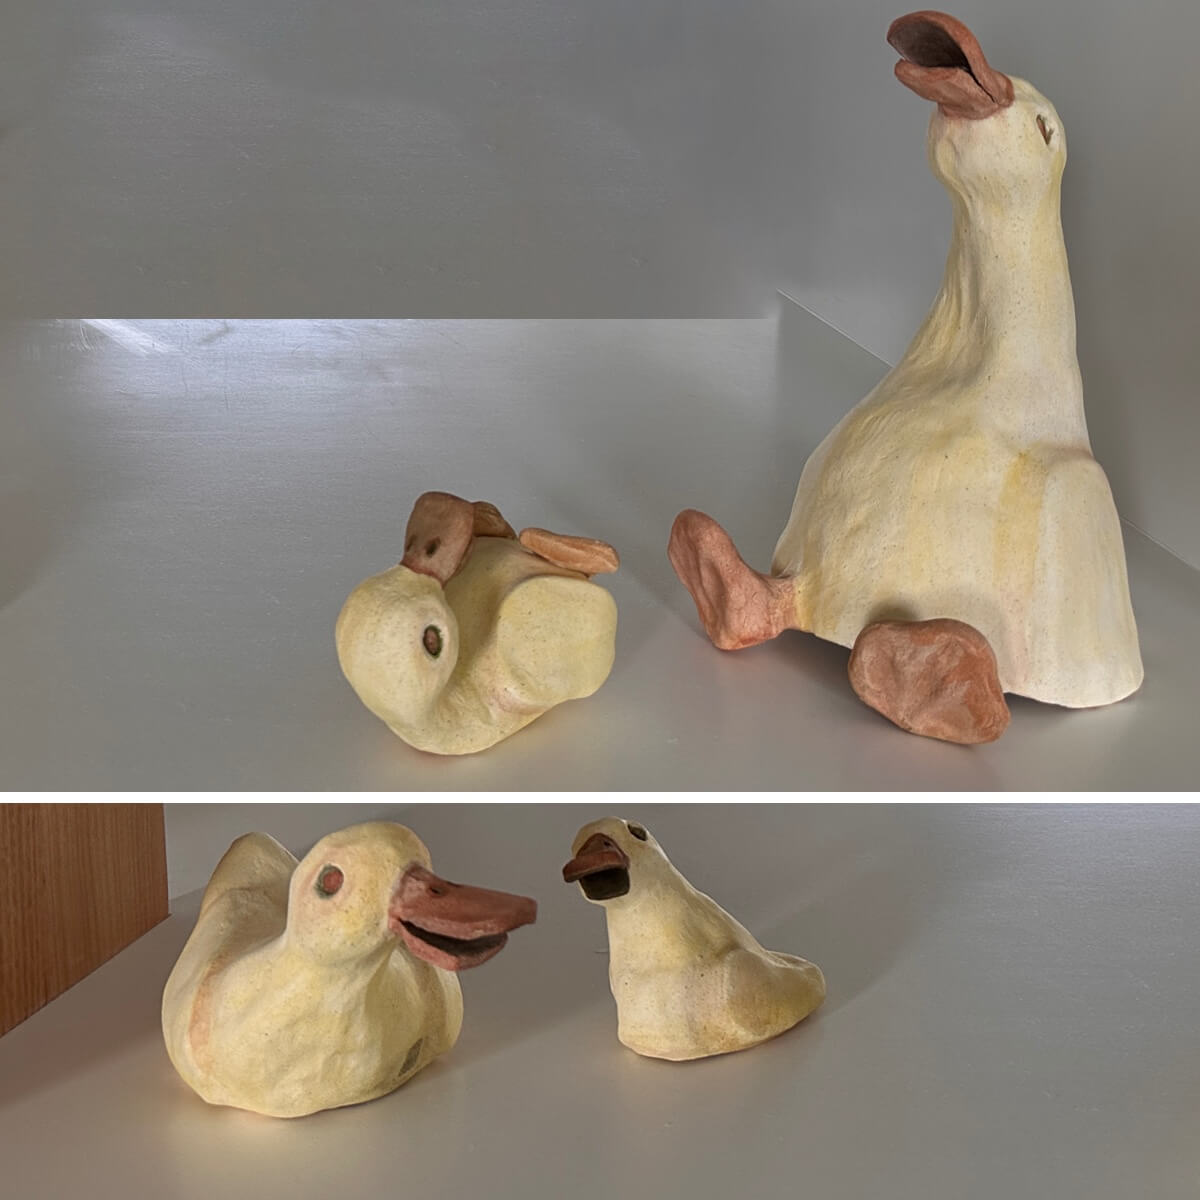 Student sculpture titled “Make a Splash: Ducks” 